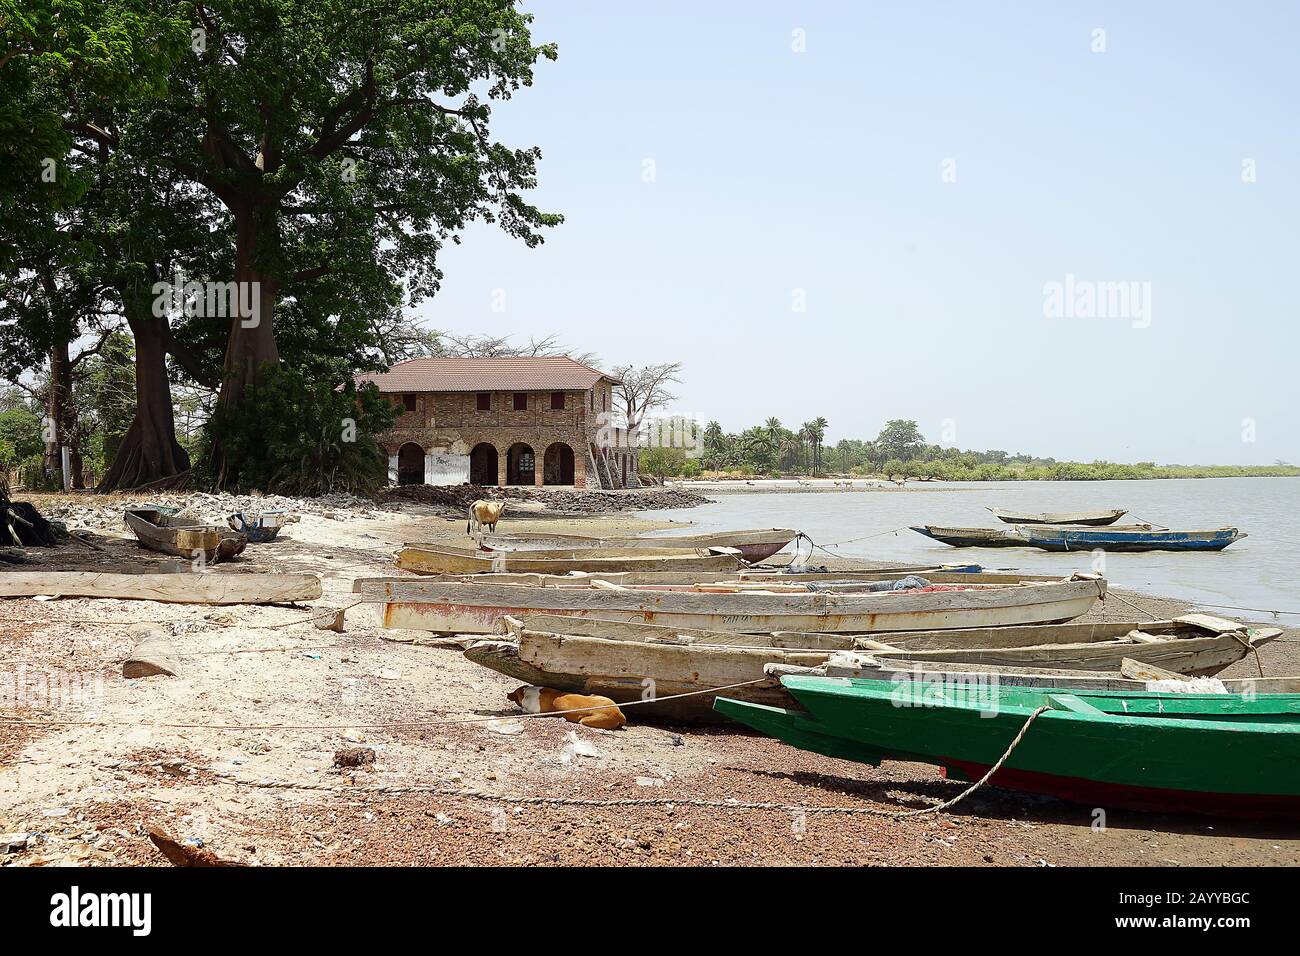 Gambia kunta kinteh island Slave James Island and St Andrew's Island Stock Photo